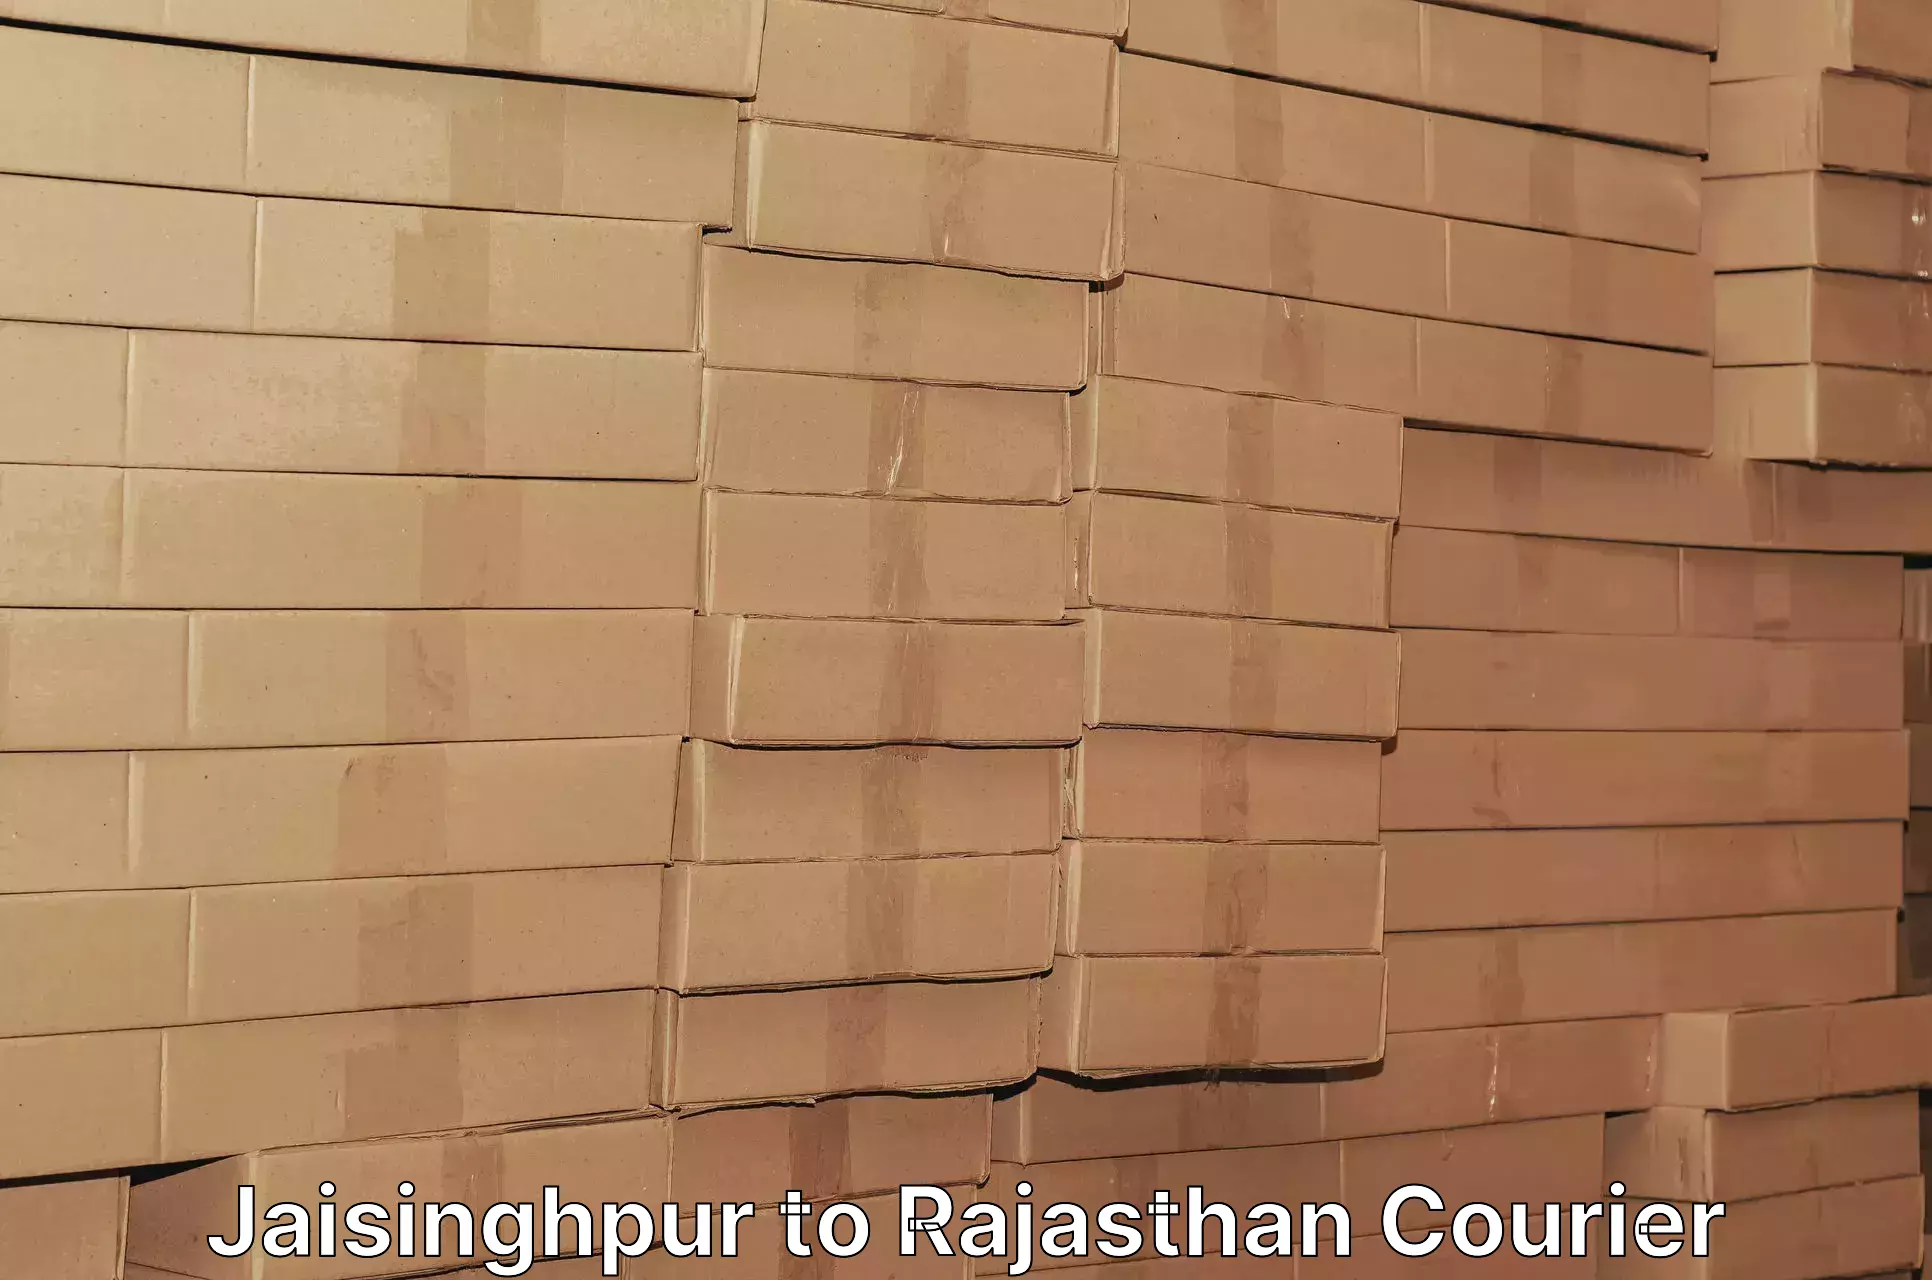 Seamless shipping experience Jaisinghpur to Rajasthan